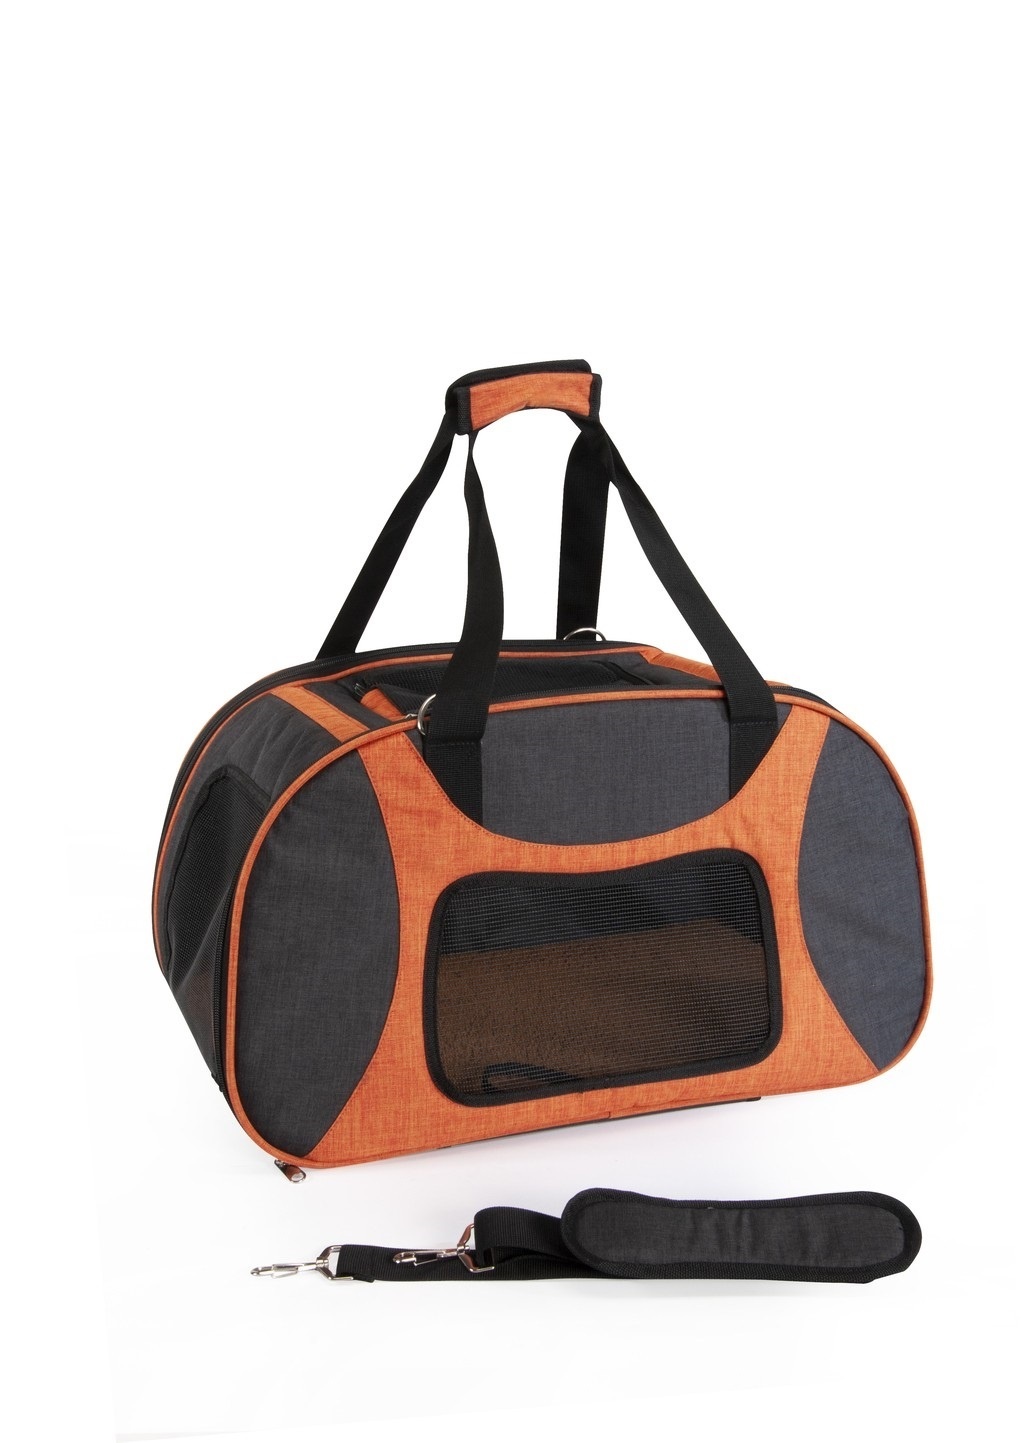 Camon Camon сумка-переноска со съёмной тележкой, 53x31x31 см (3,32 кг) camon camon сумка переноска прозрачная 42x25x25 см голубая 670 г